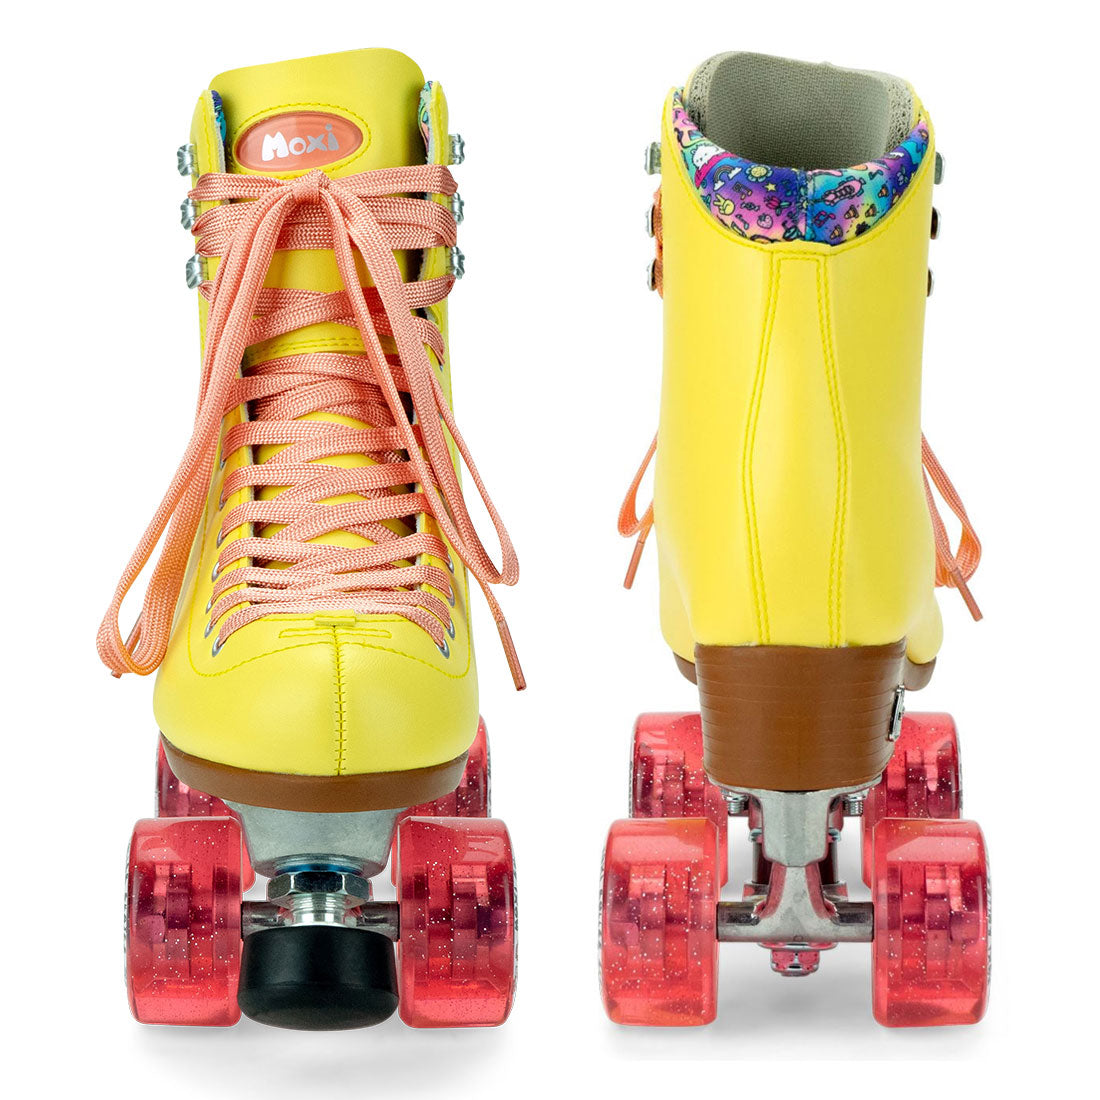 Moxi Beach Bunny - Strawberry Lemonade Roller Skates